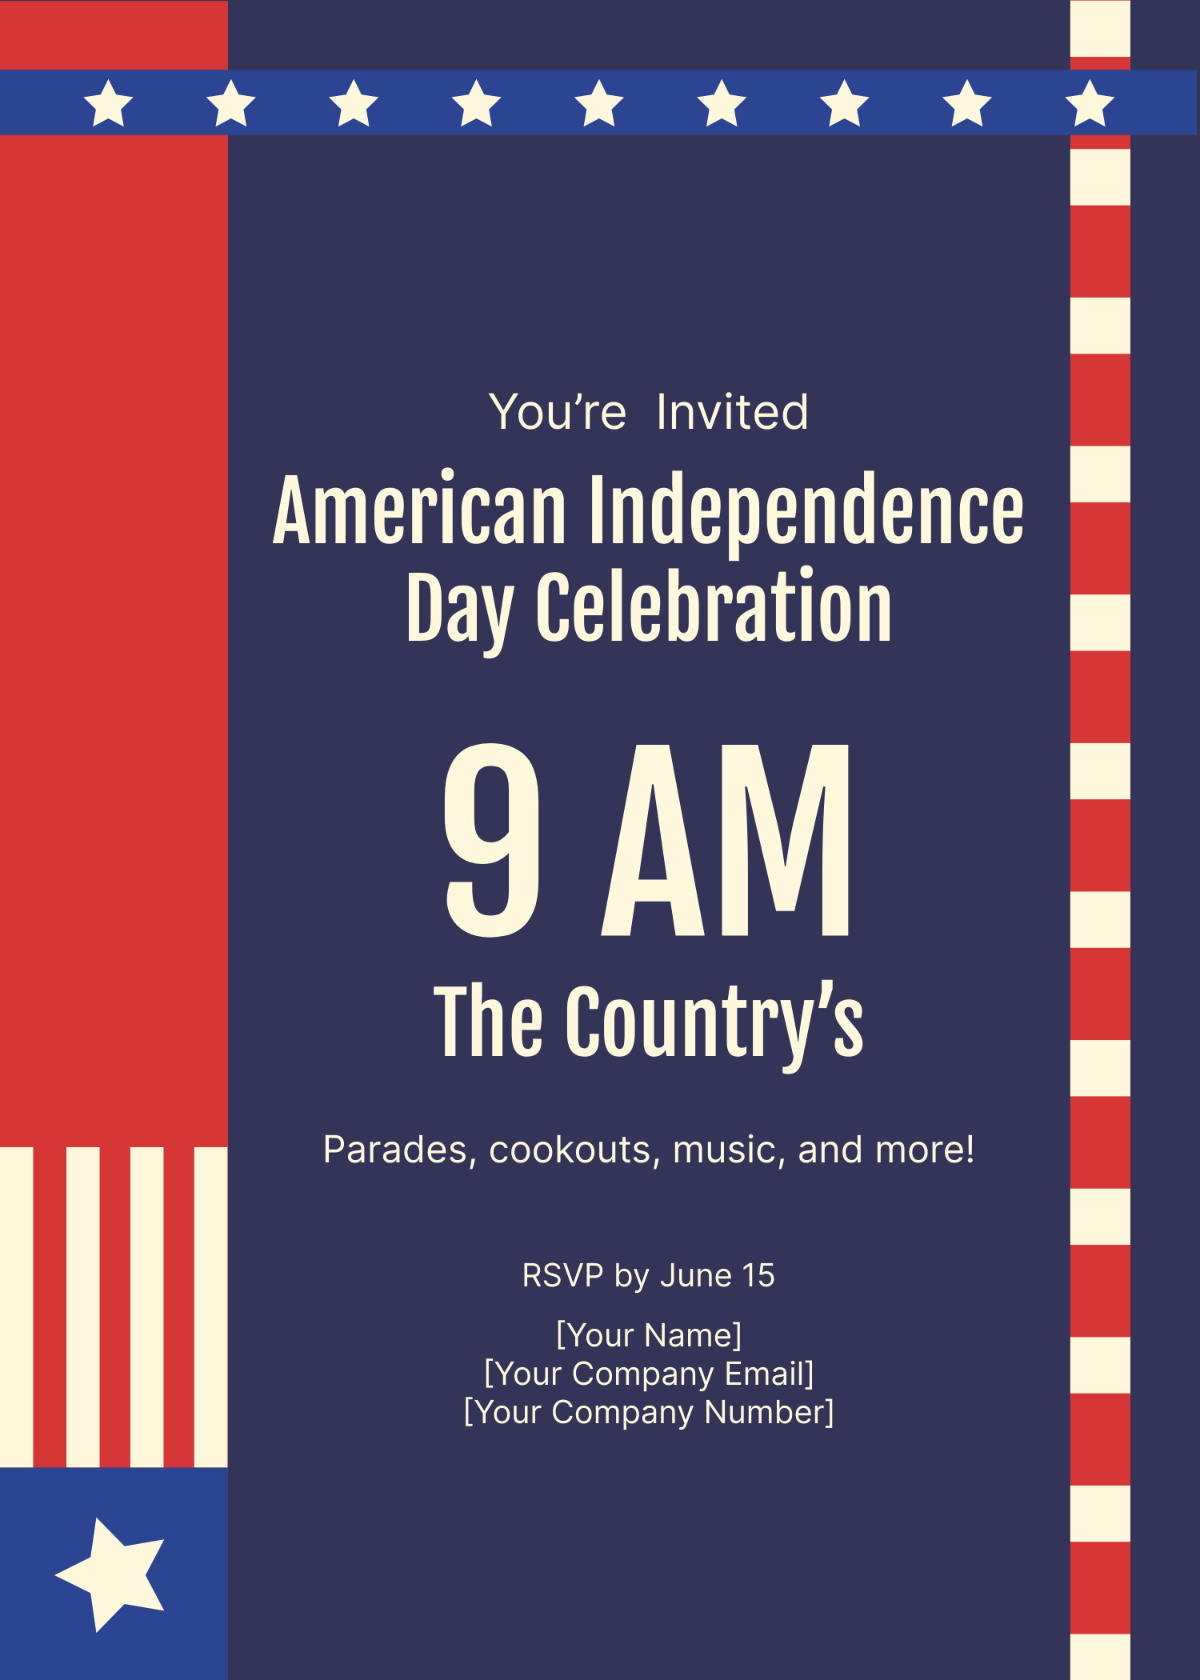 4th of July Celebration Invitation